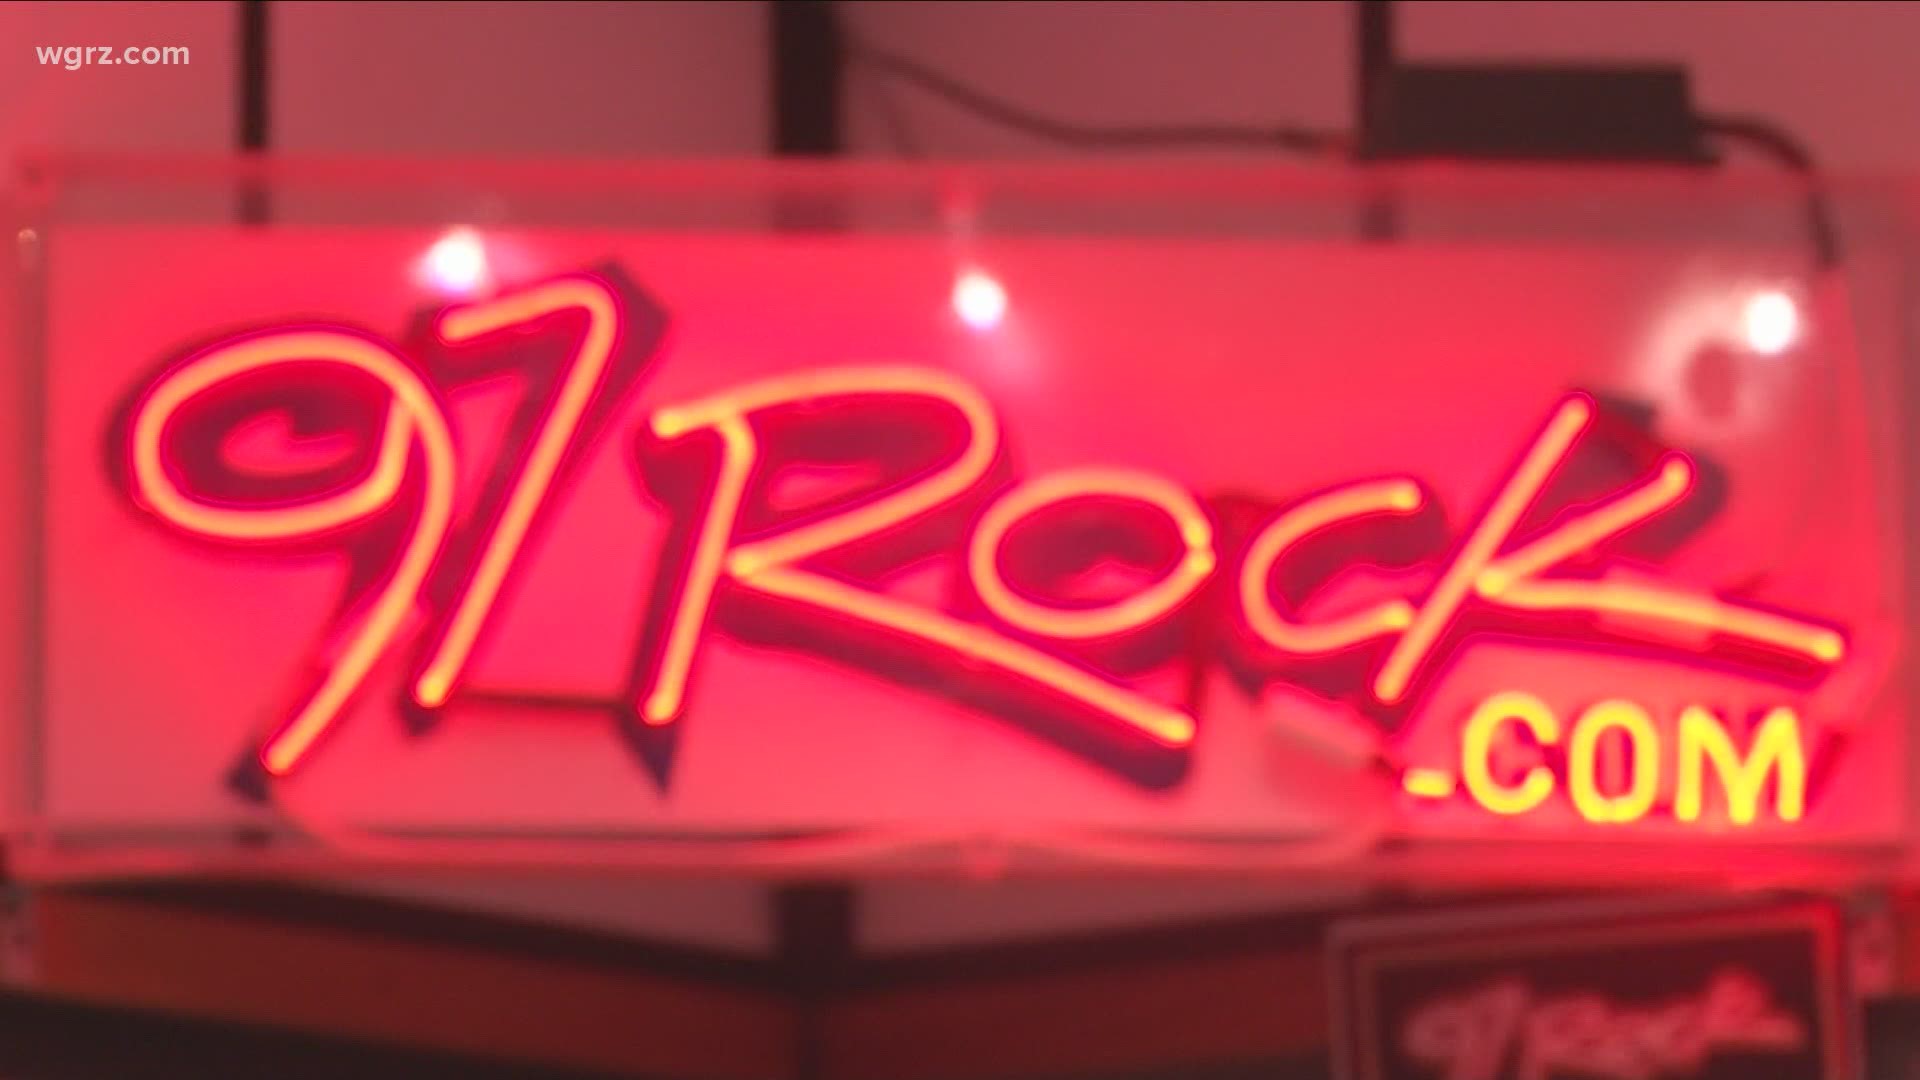 97 Rock incident spurs racism conversation